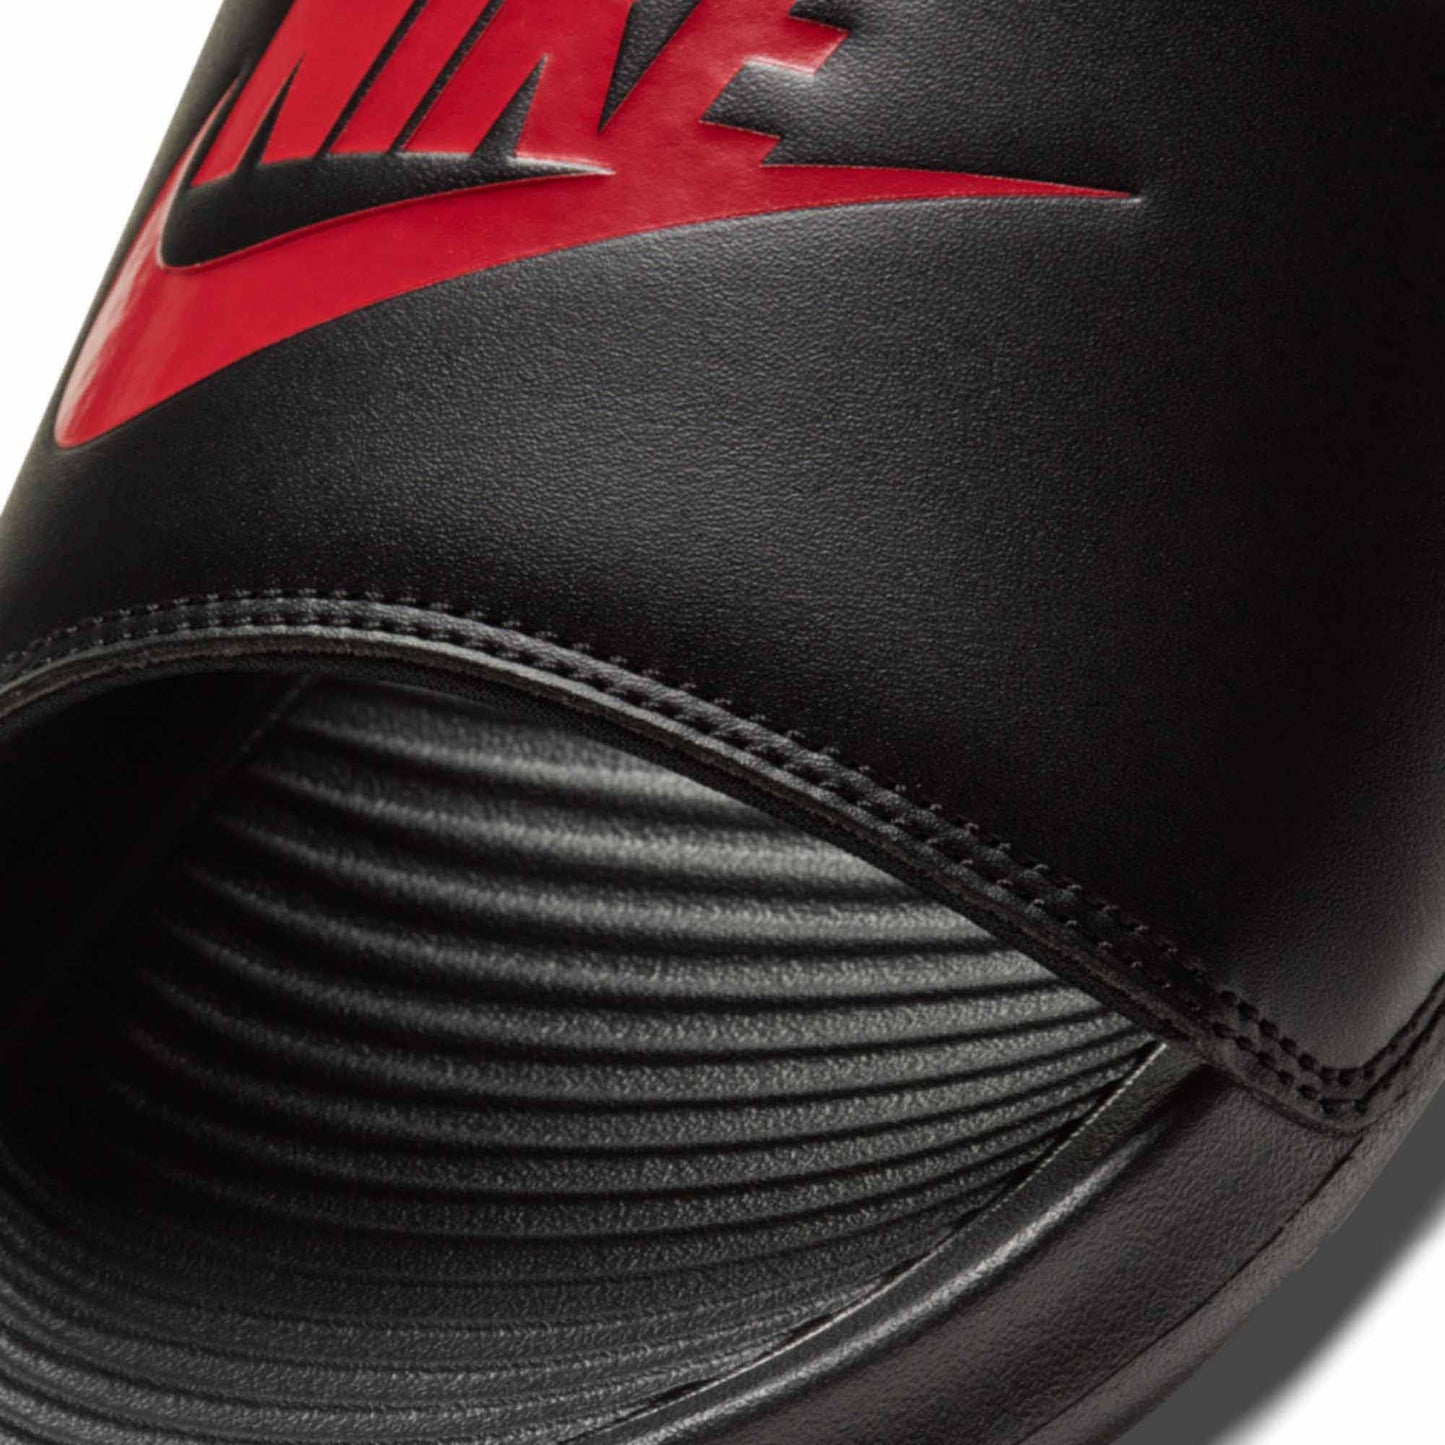 Nike Unisex Victori One Slides Black / Red - (CN9675 004) - ZI - R2L15